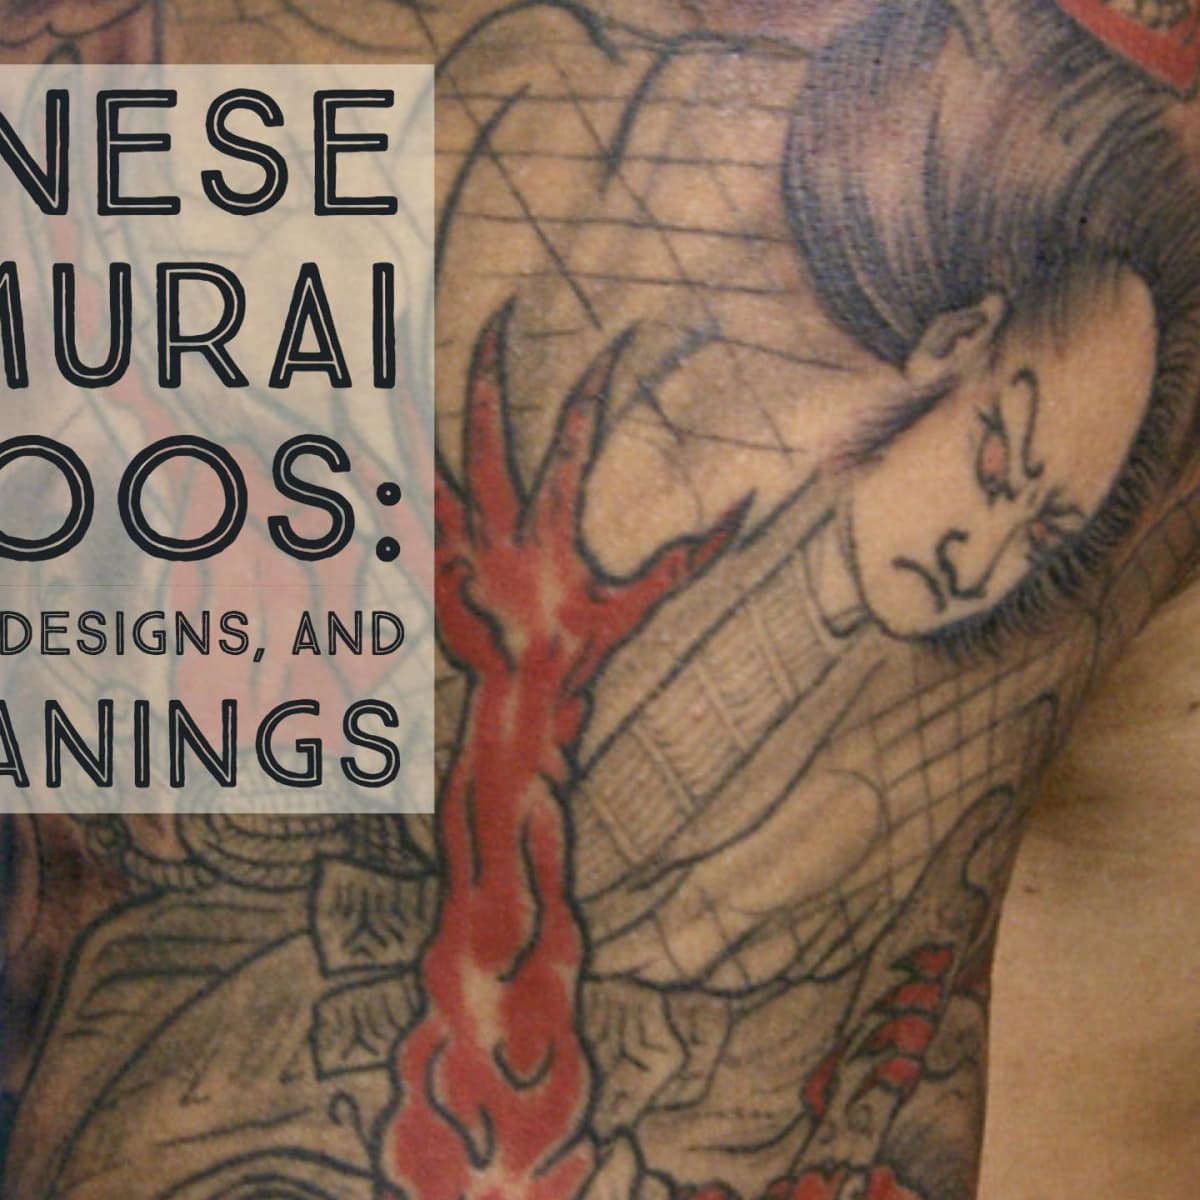 Top 30 Samurai Tattoo Design Ideas 2023 Updated  Saved Tattoo